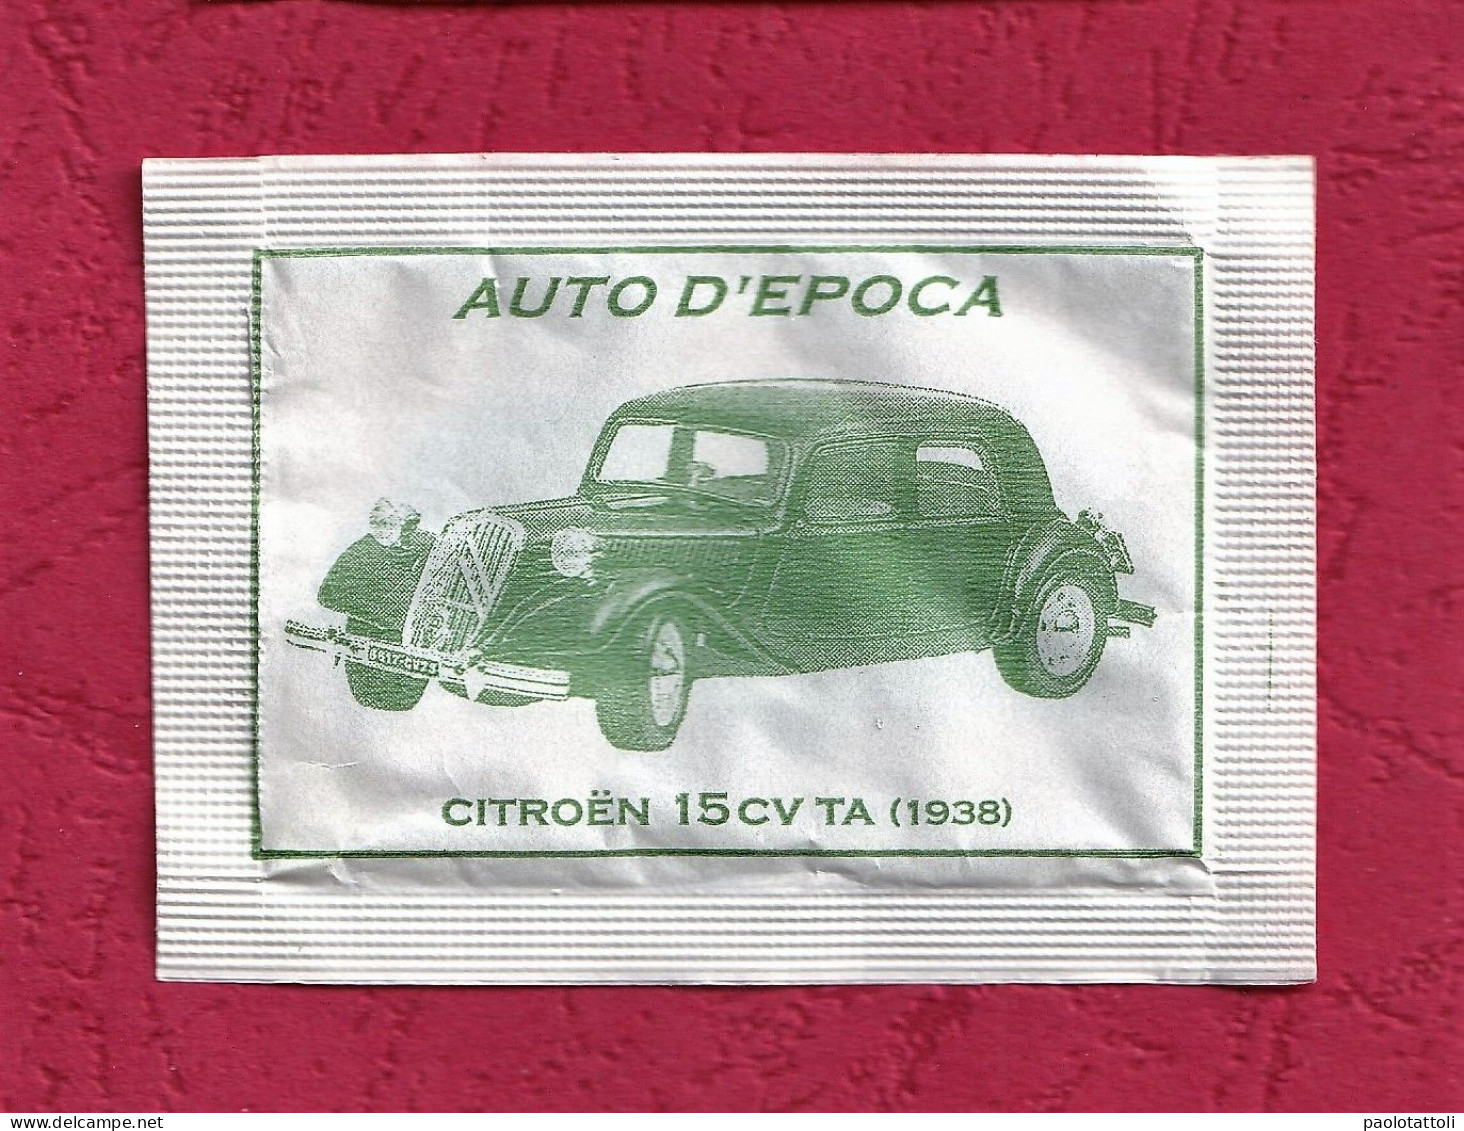 Bustina Vuota Zucchero. Empty Sugar Bag- Cars. Auto D'epoca, Citroen 15 Cv TA-1938. Packed By Pubblisugar, Andria. BA. - Sugars